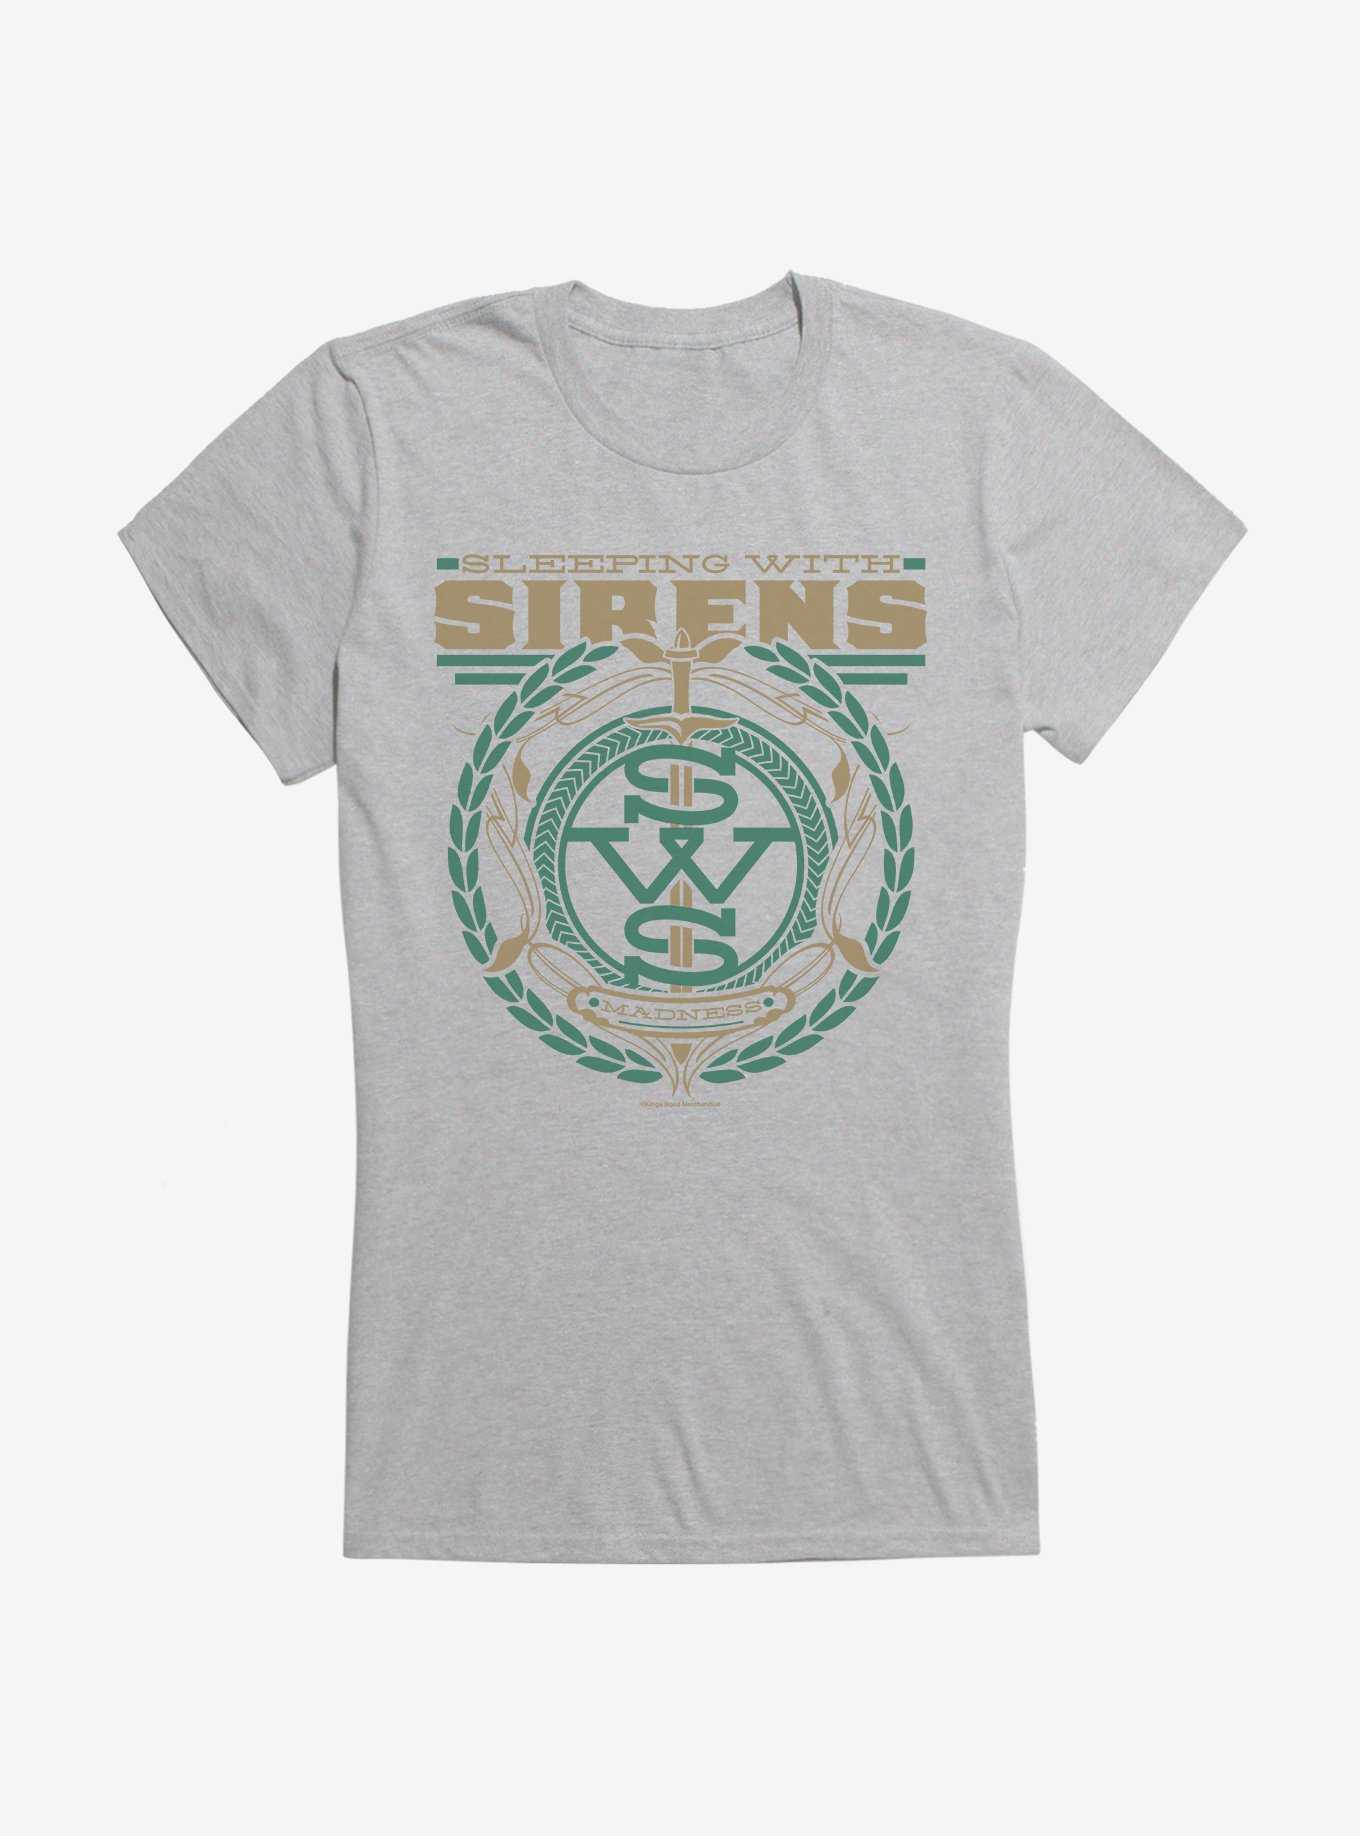 Sleeping With Sirens Dagger Crest Girls T-Shirt, , hi-res